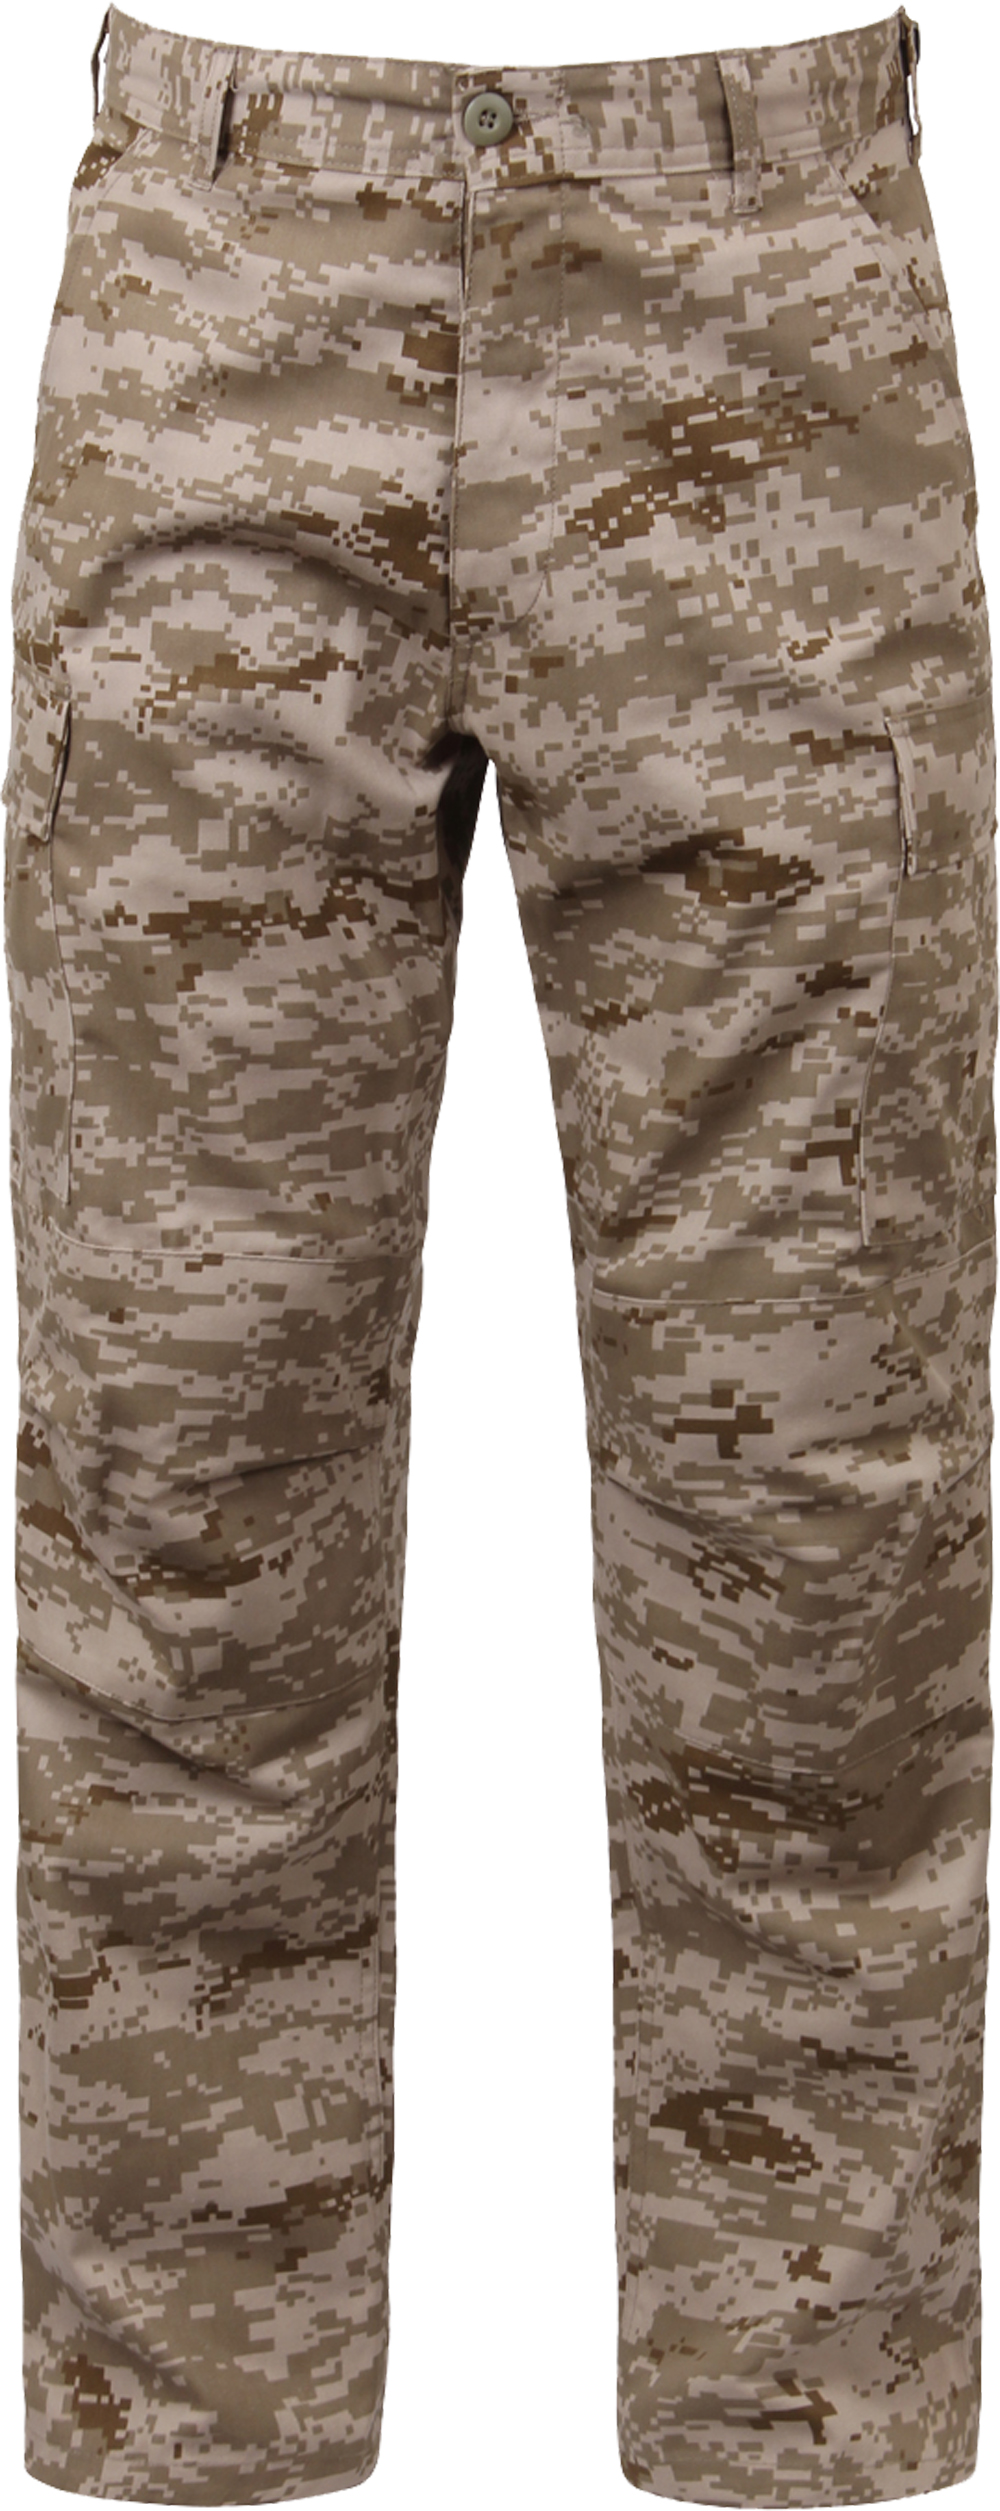 Rothco Desert Digital Camouflage Military BDU Pants